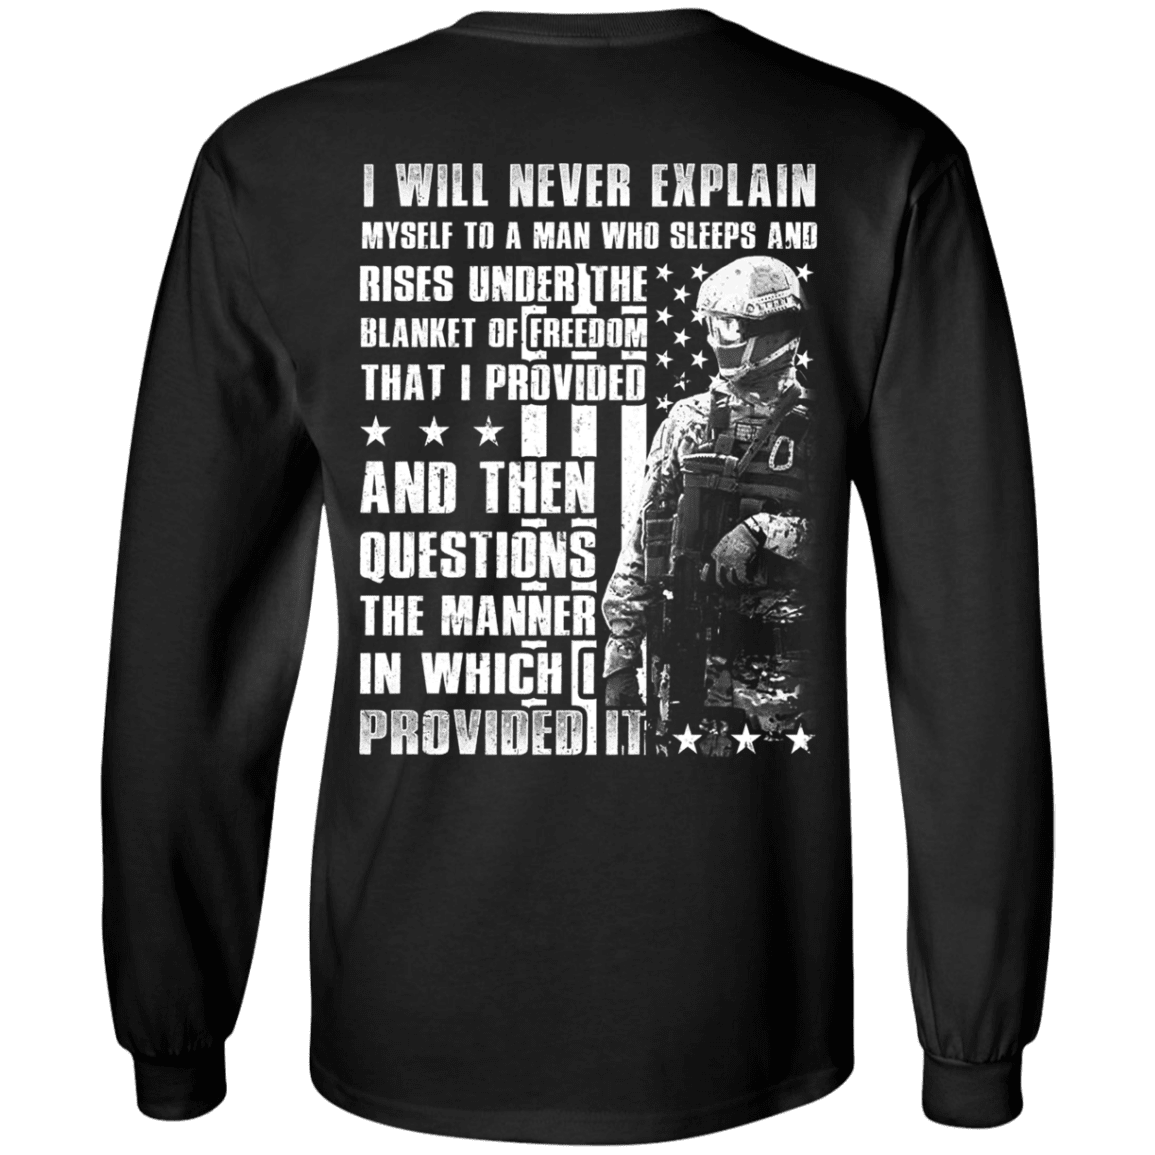 Military T-Shirt "Veteran - I Will Never Explain Myself To A Man" - Men Back-TShirt-General-Veterans Nation